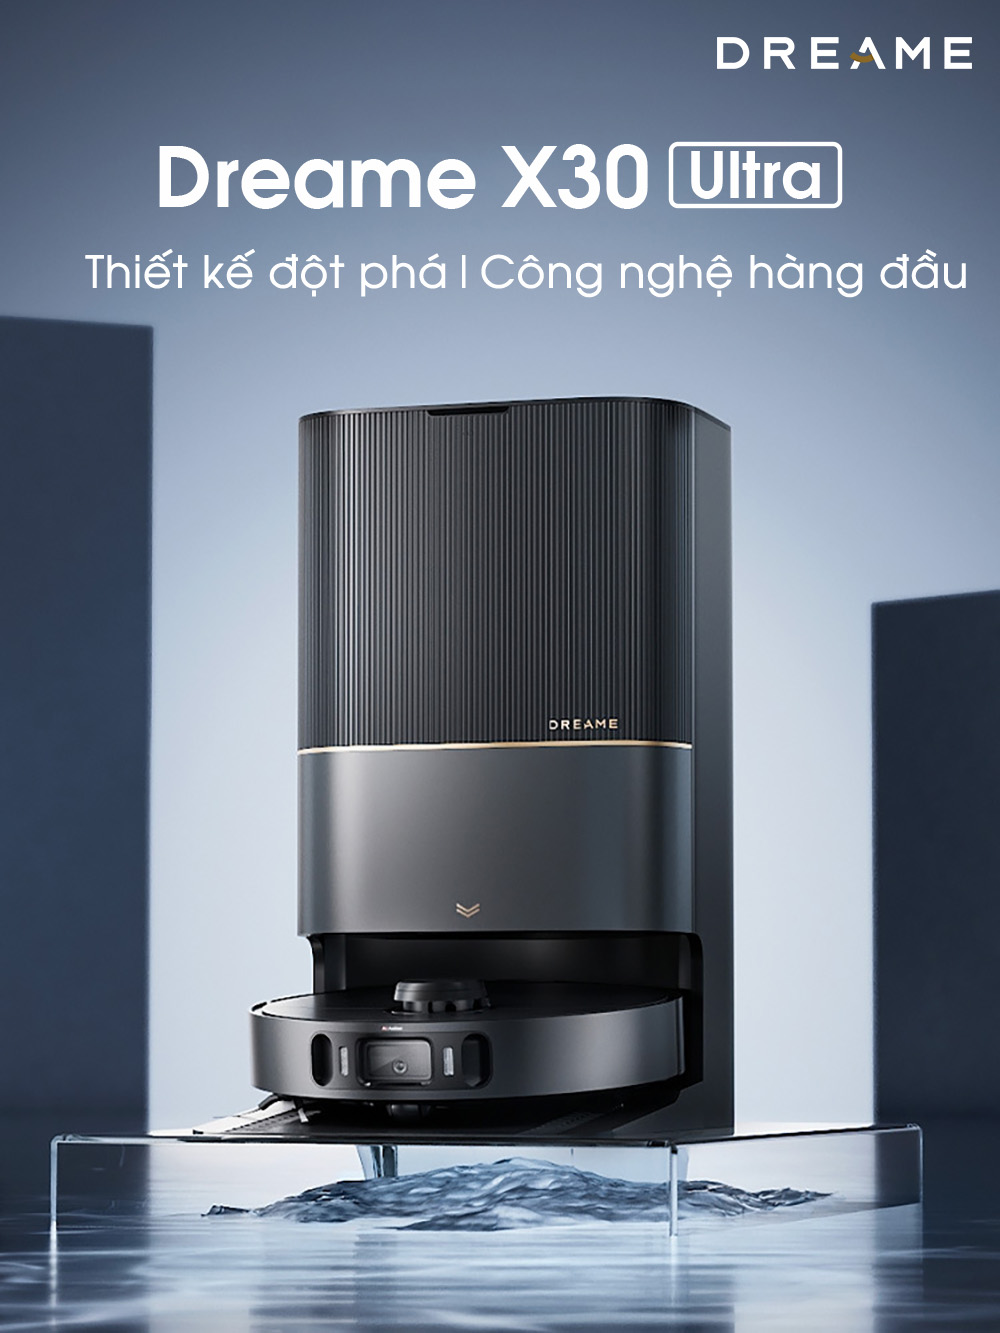 dreame-x30-ultra-7880d365-4b0b-4766-a663-7d38fa1a0bac.jpg